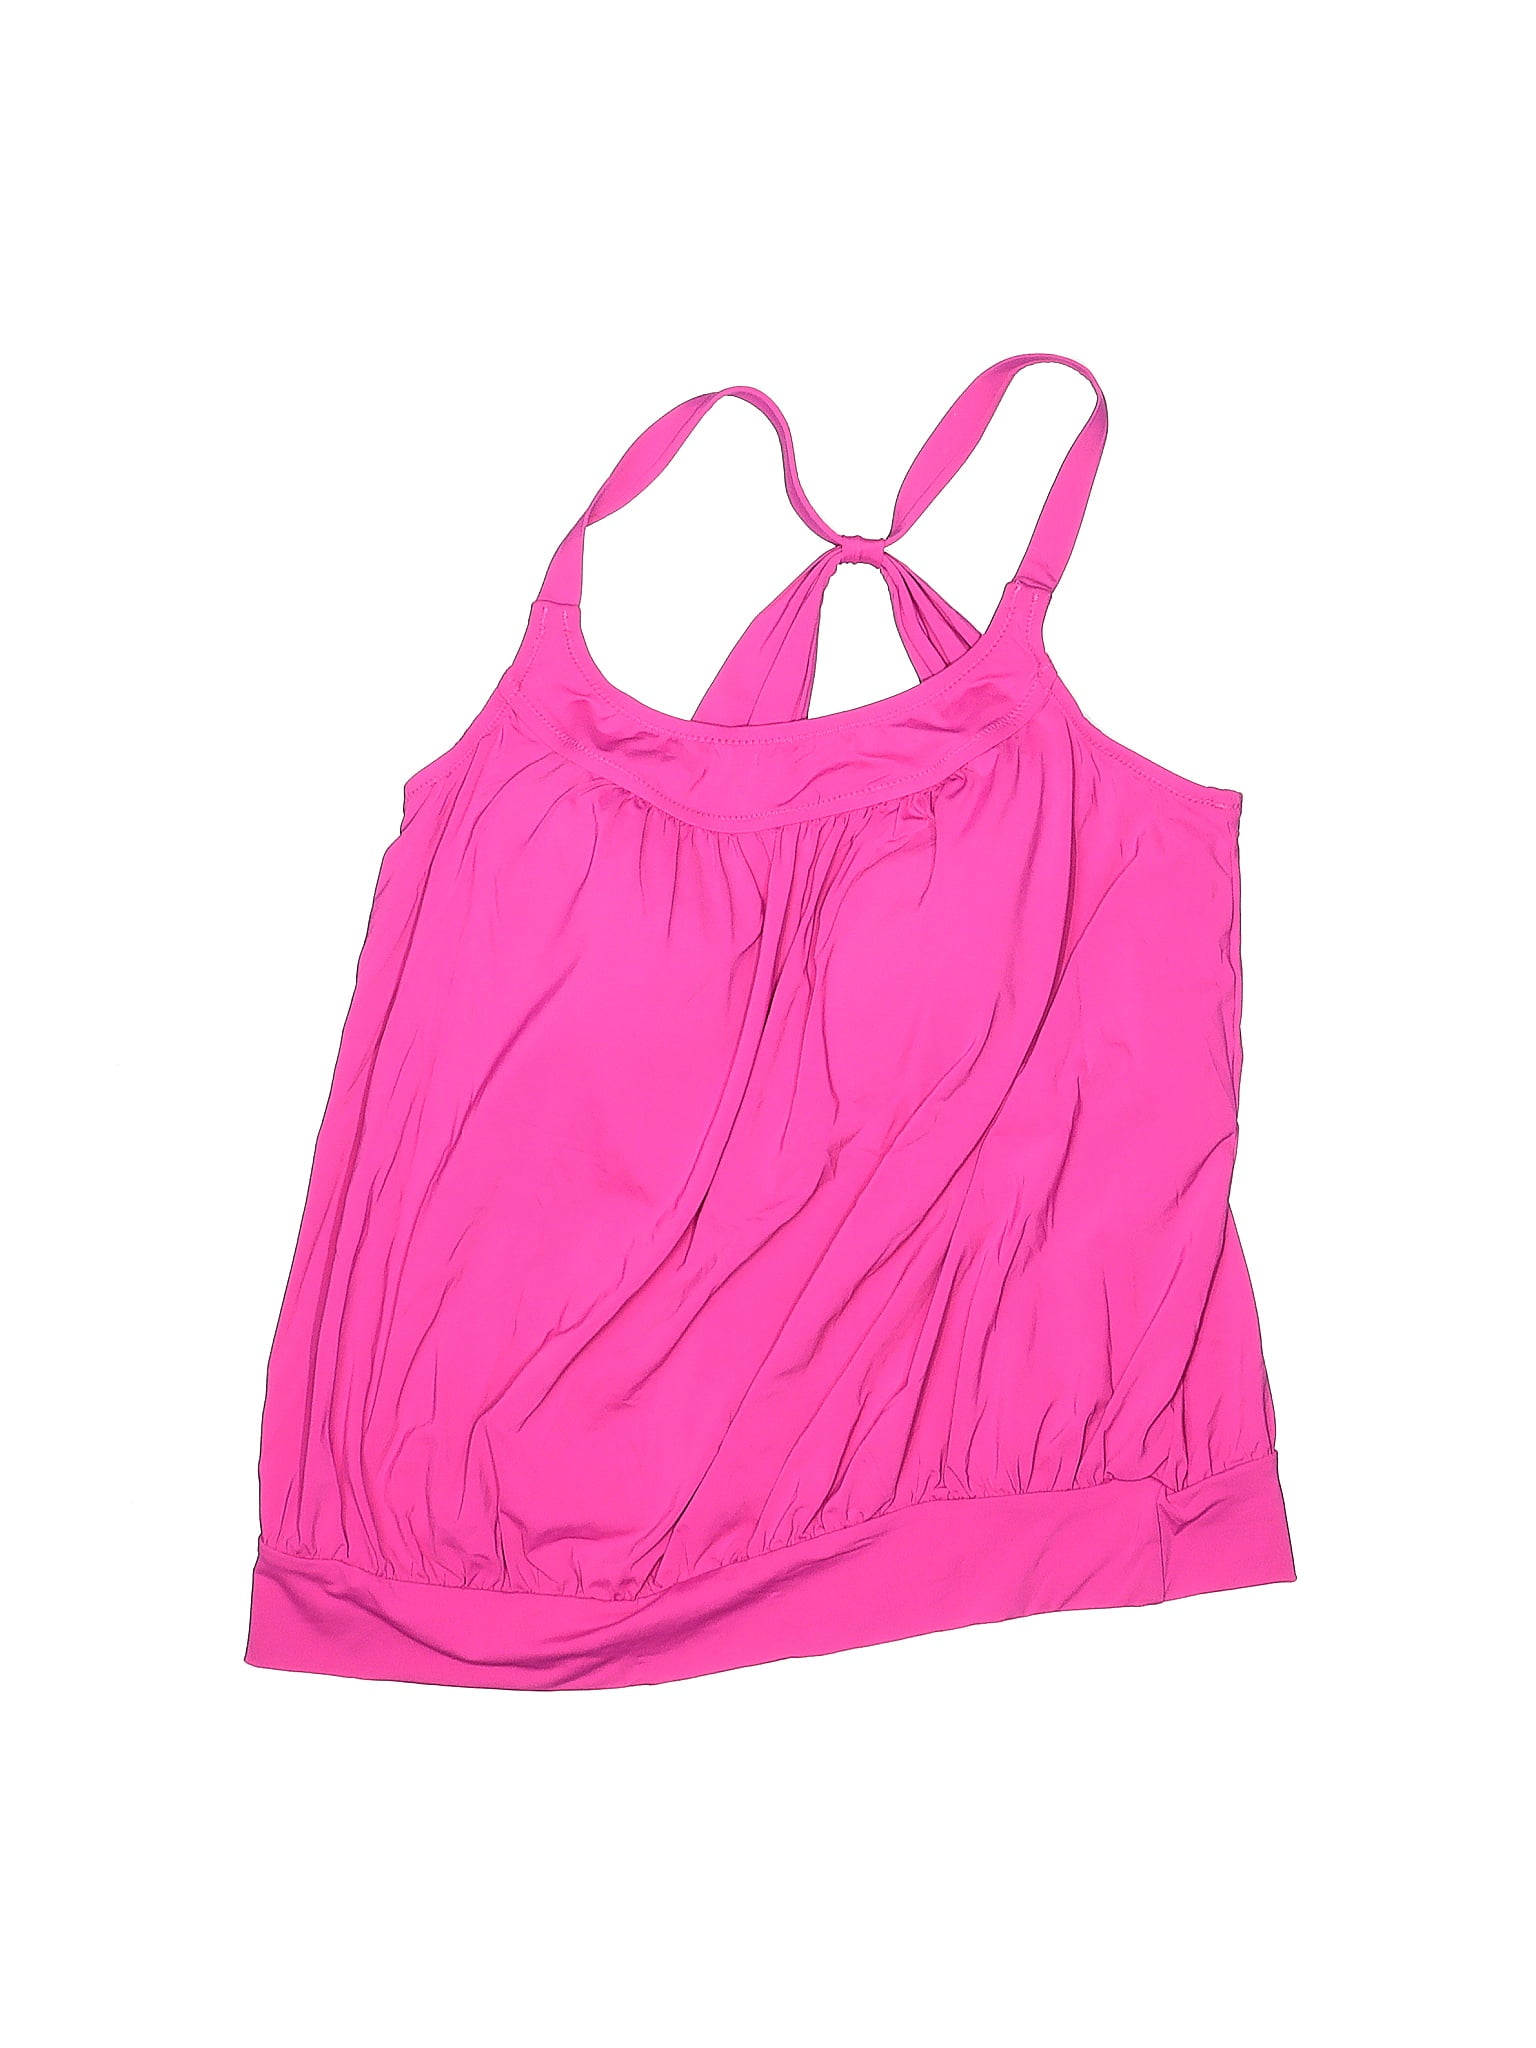 Lands' End Solid Pink Swimsuit Top Size 14 - 67% off | thredUP